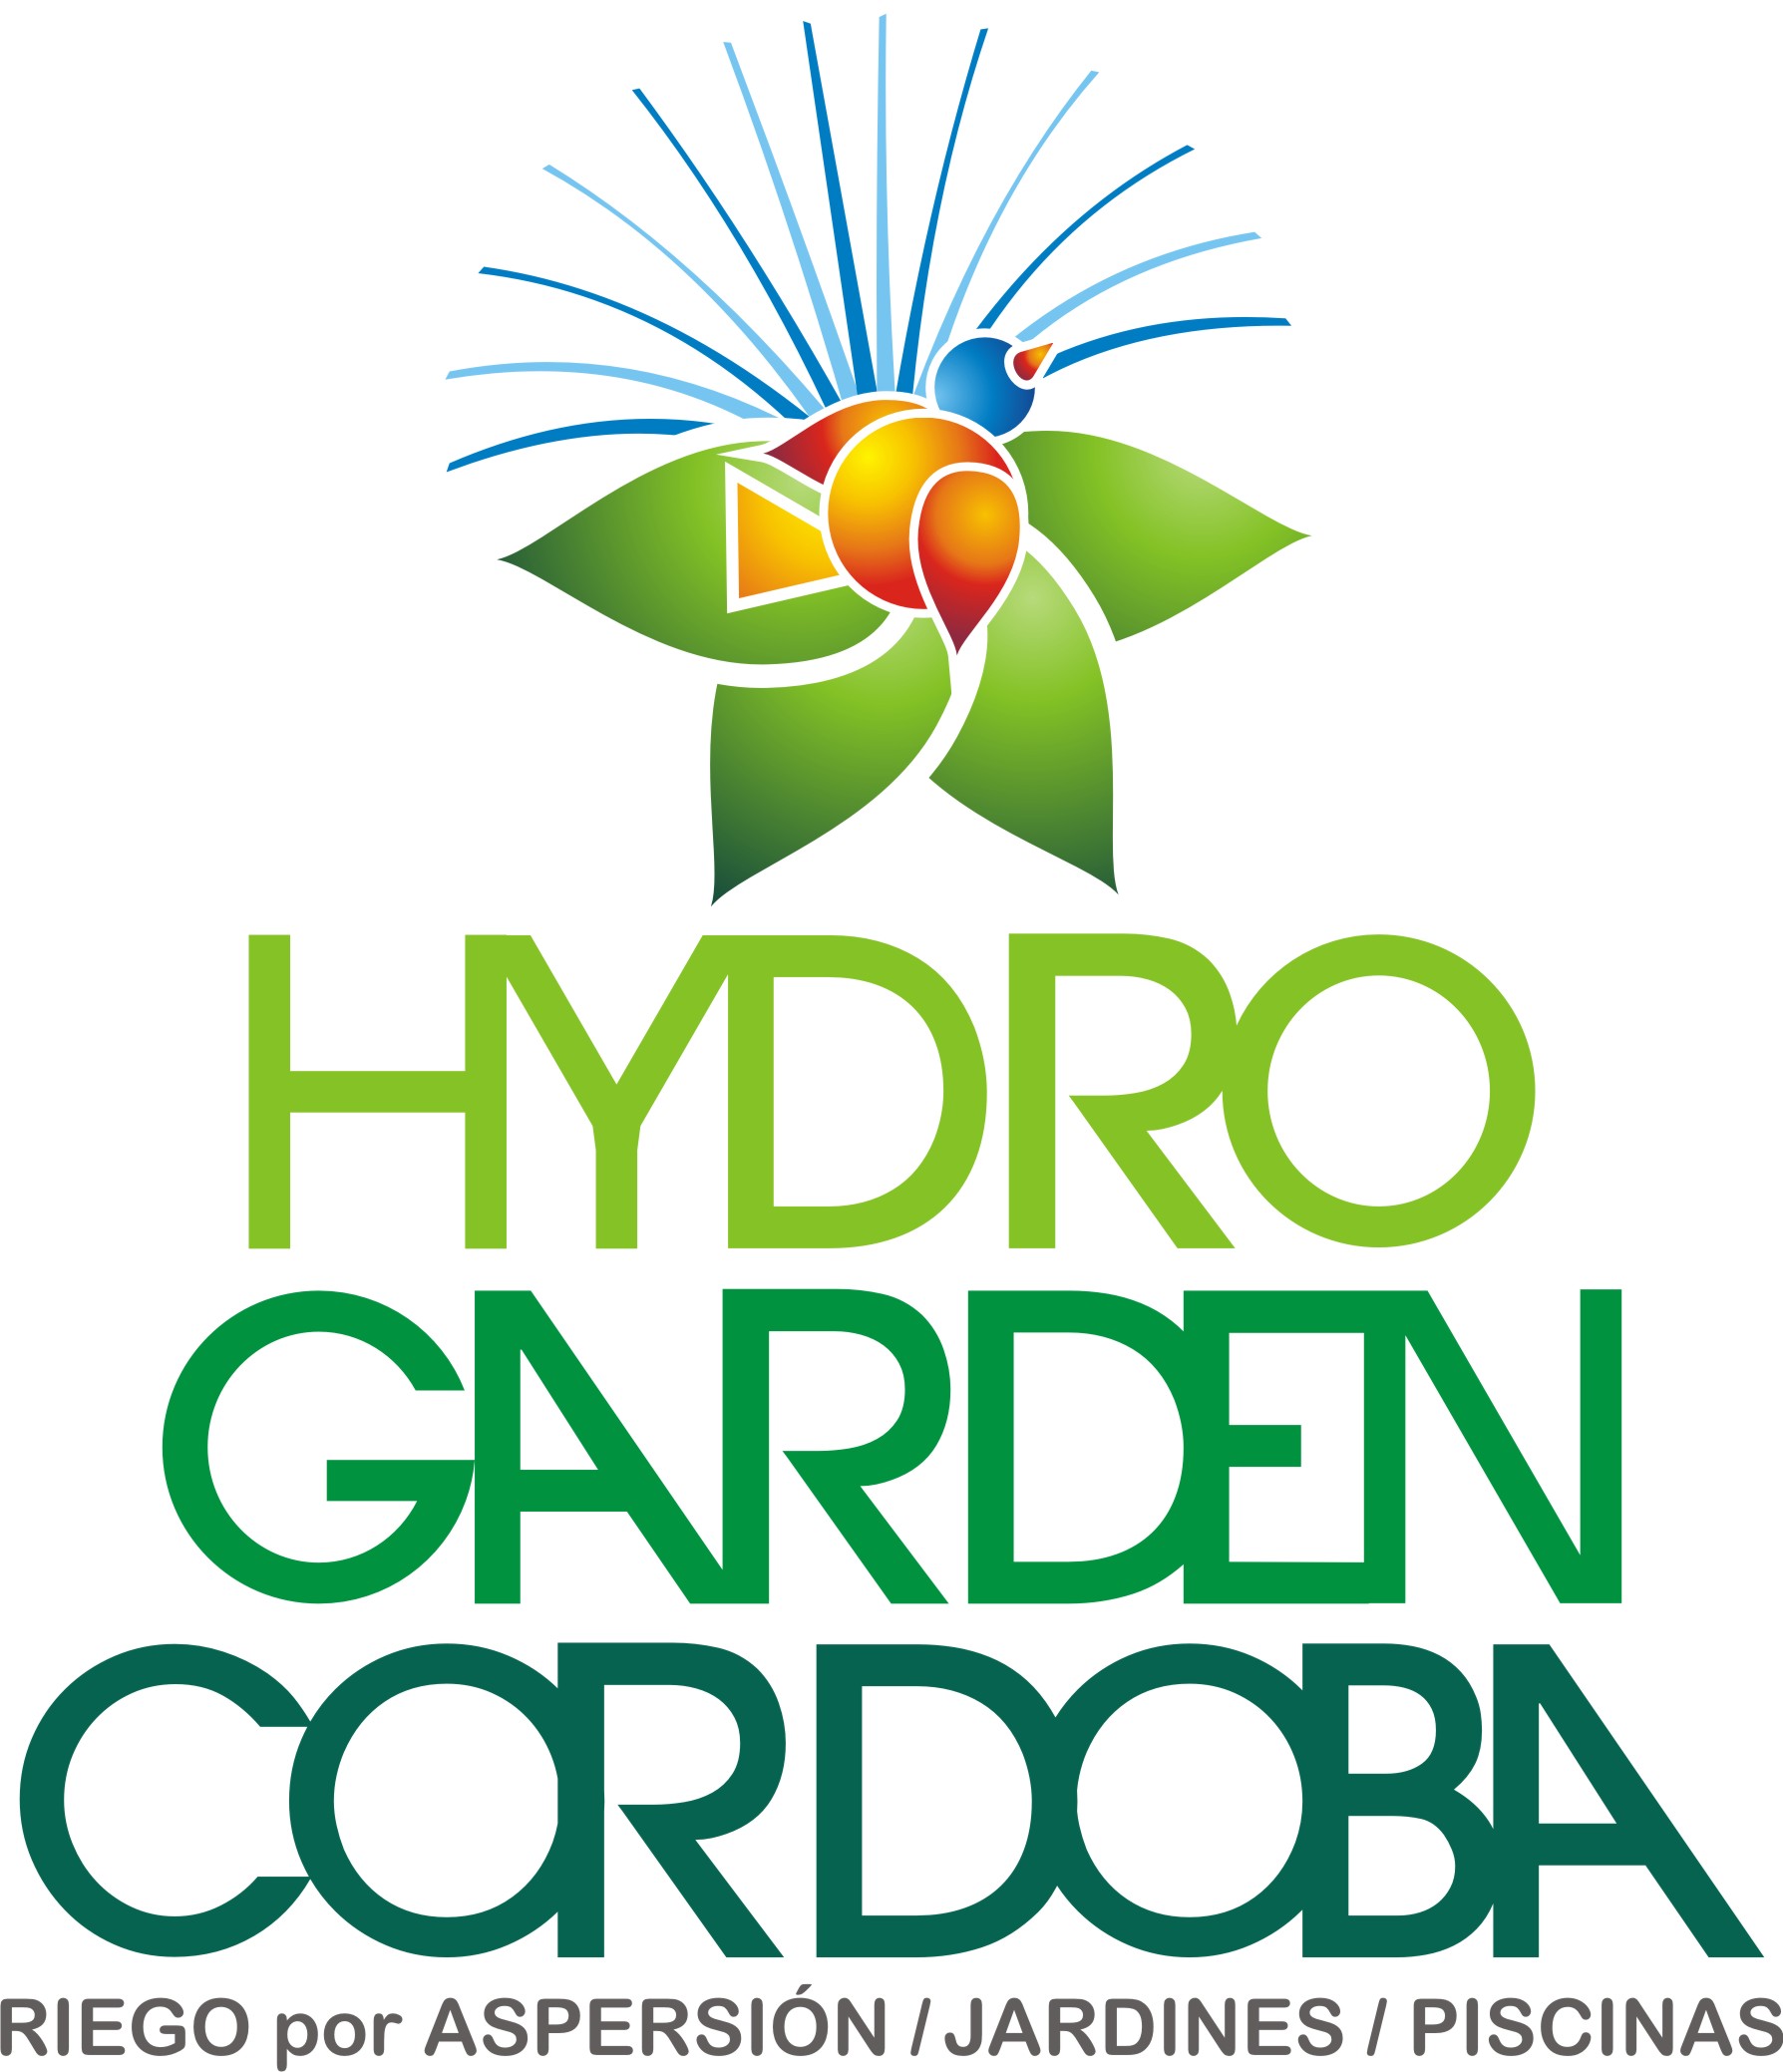 Hydro Garden Cordoba Córdoba